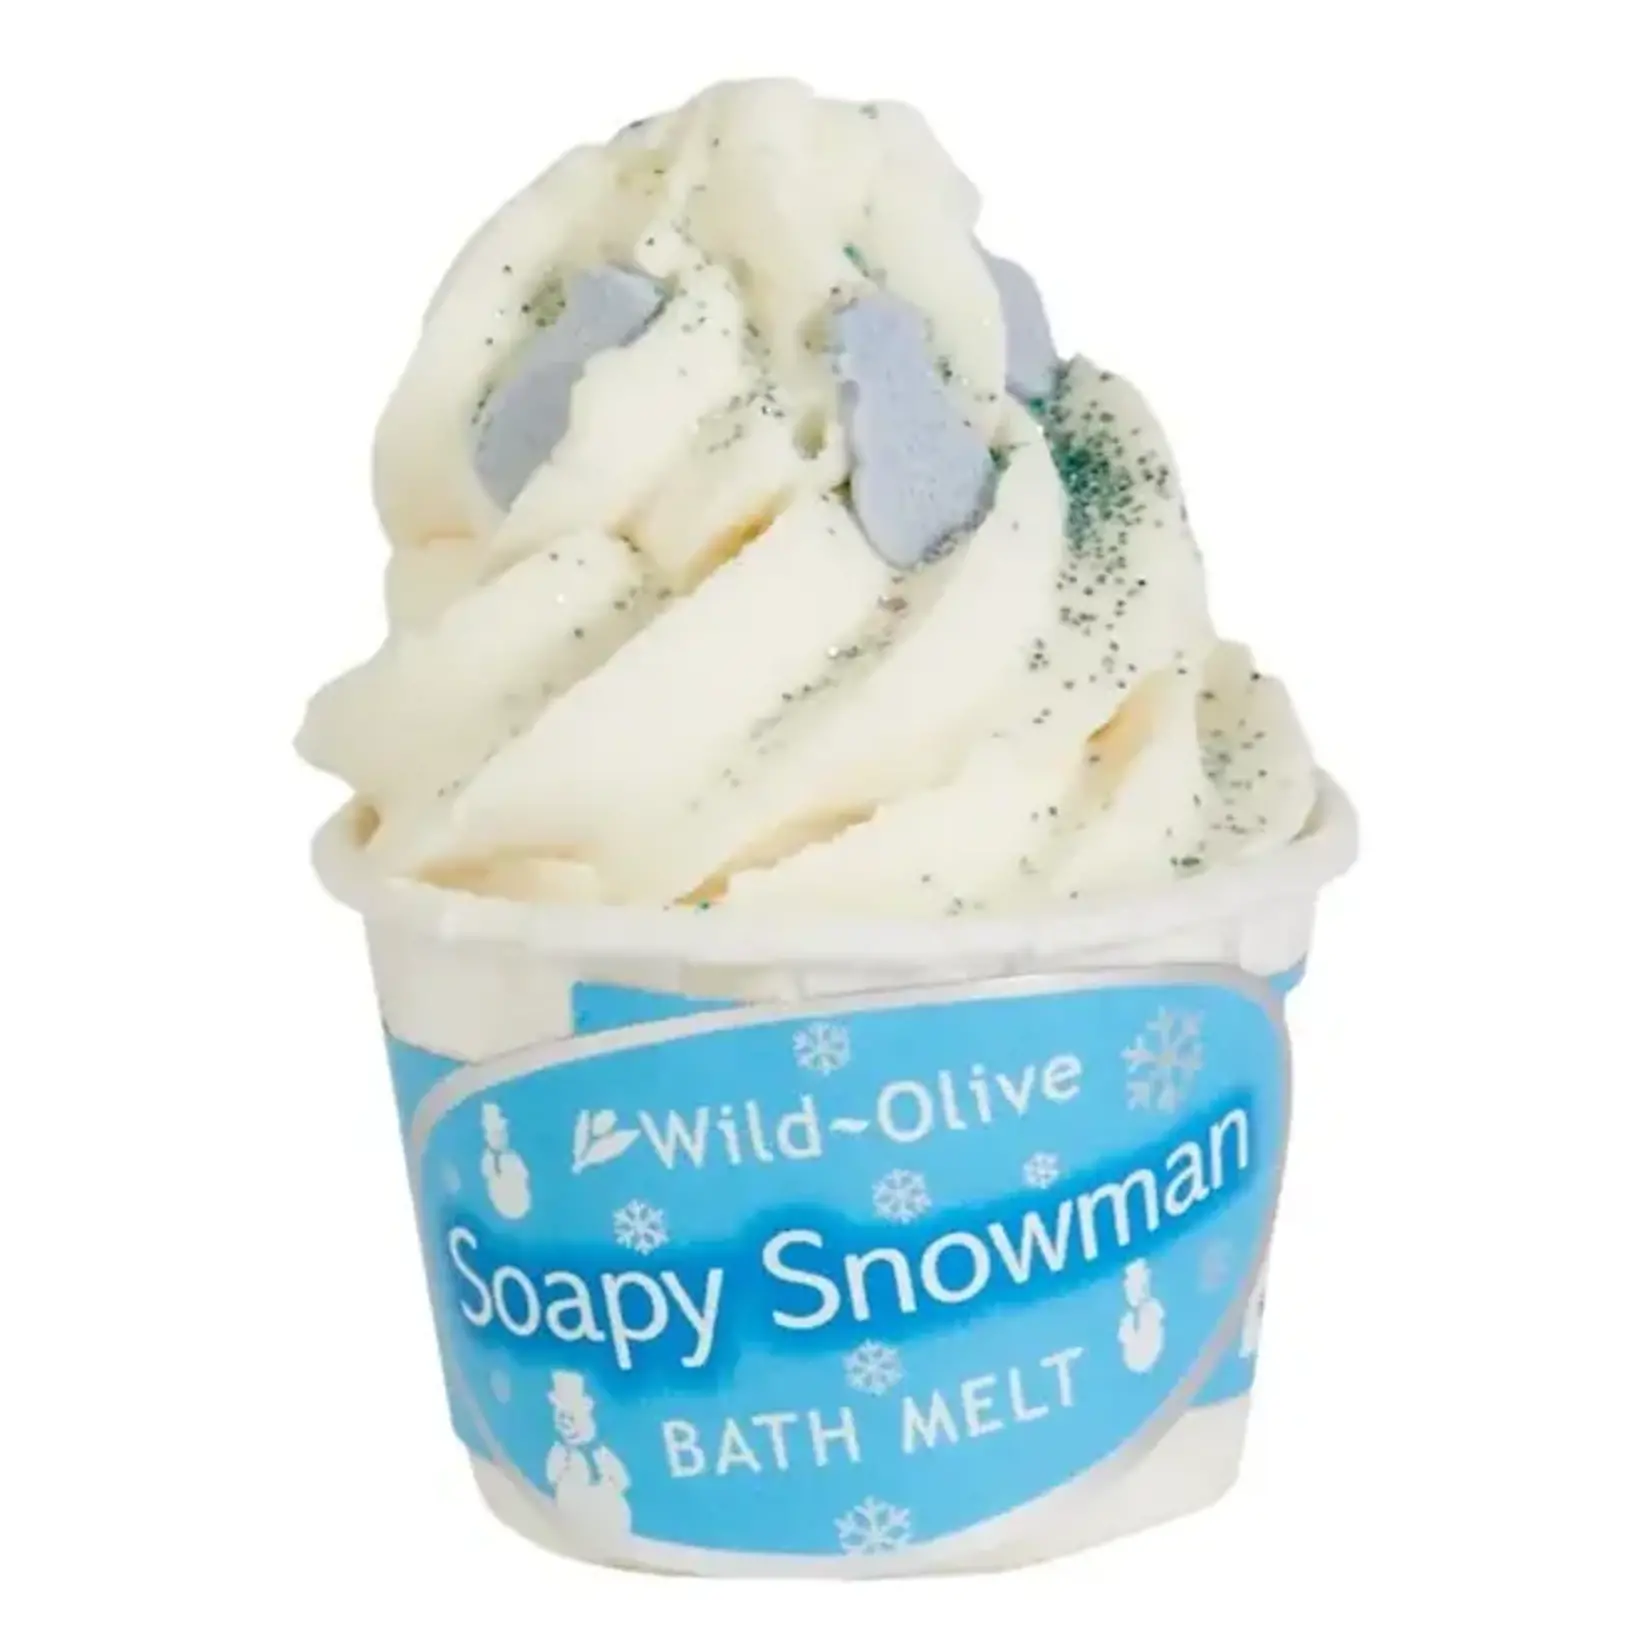 Wild Olive Wild Olive Soapy Snowman Bath Melt